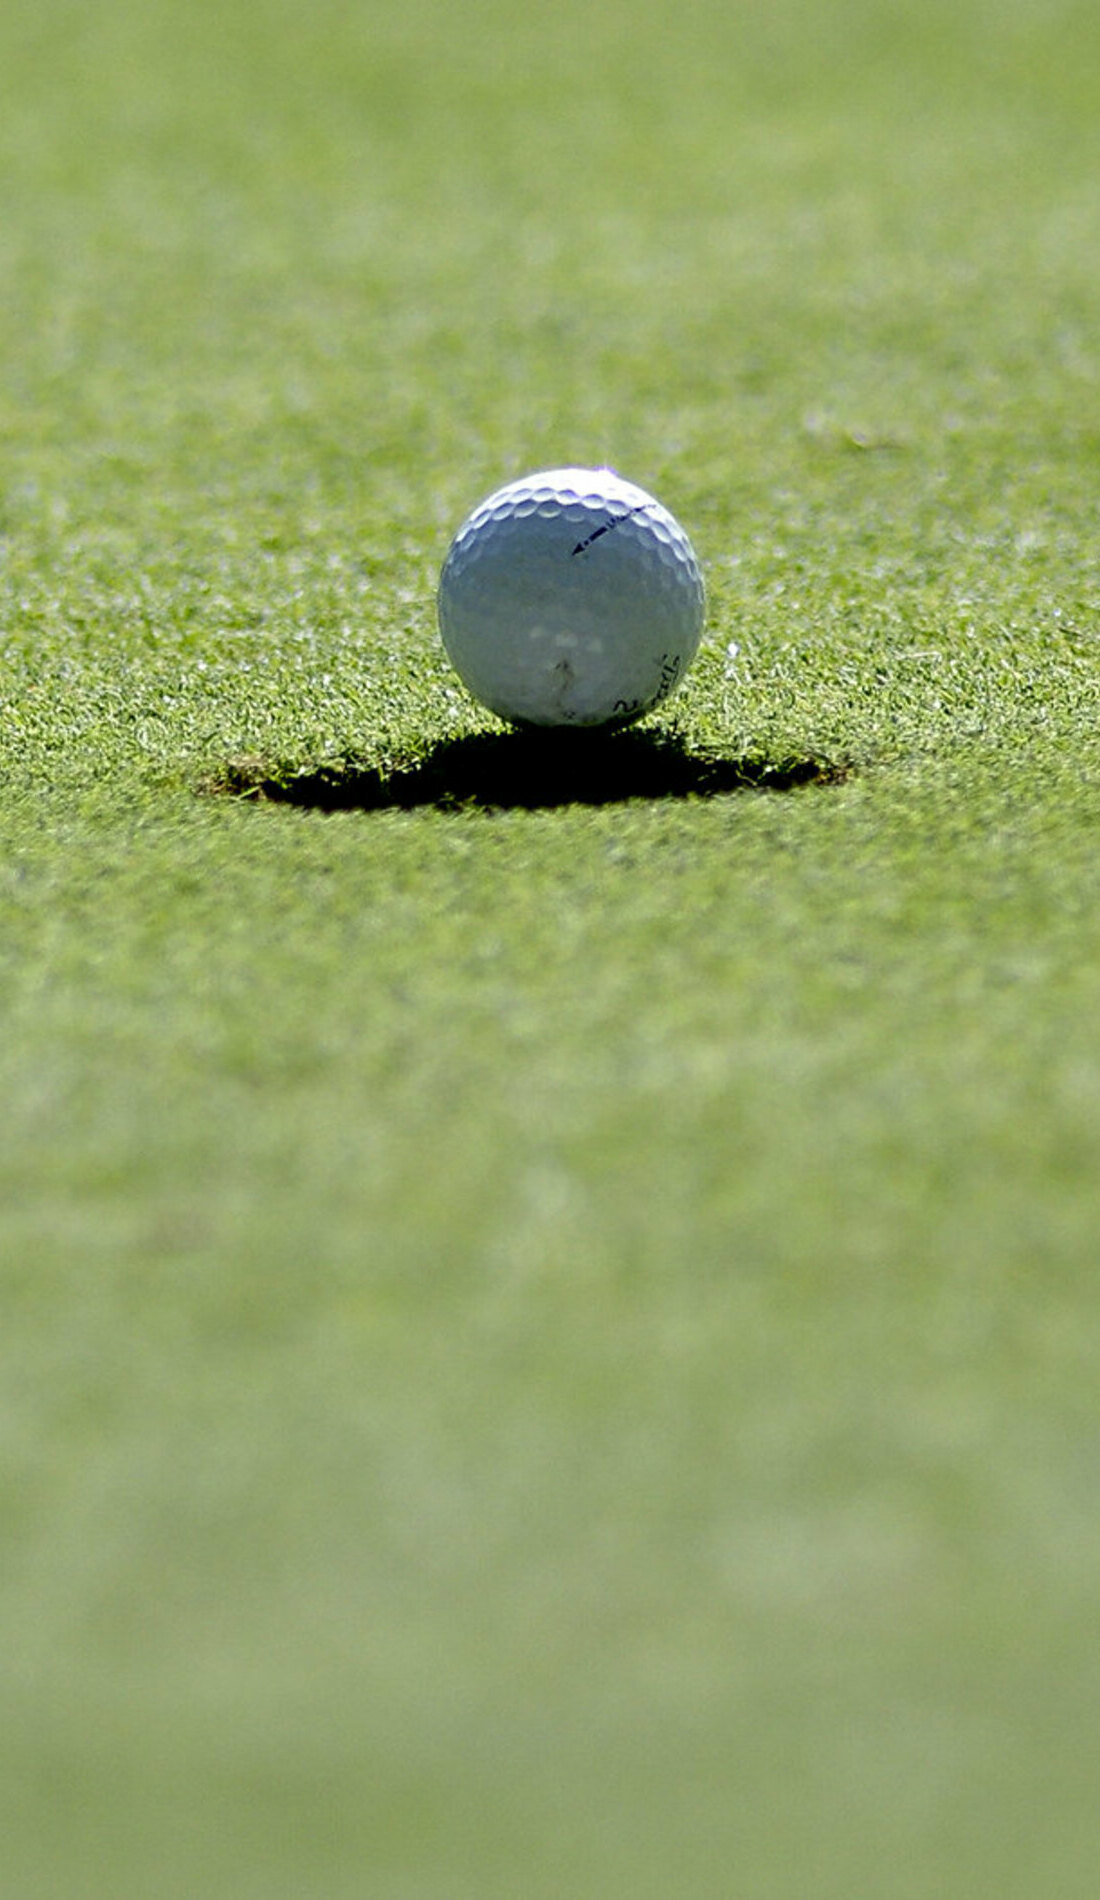 Tpc golf tournament new orleans 2017